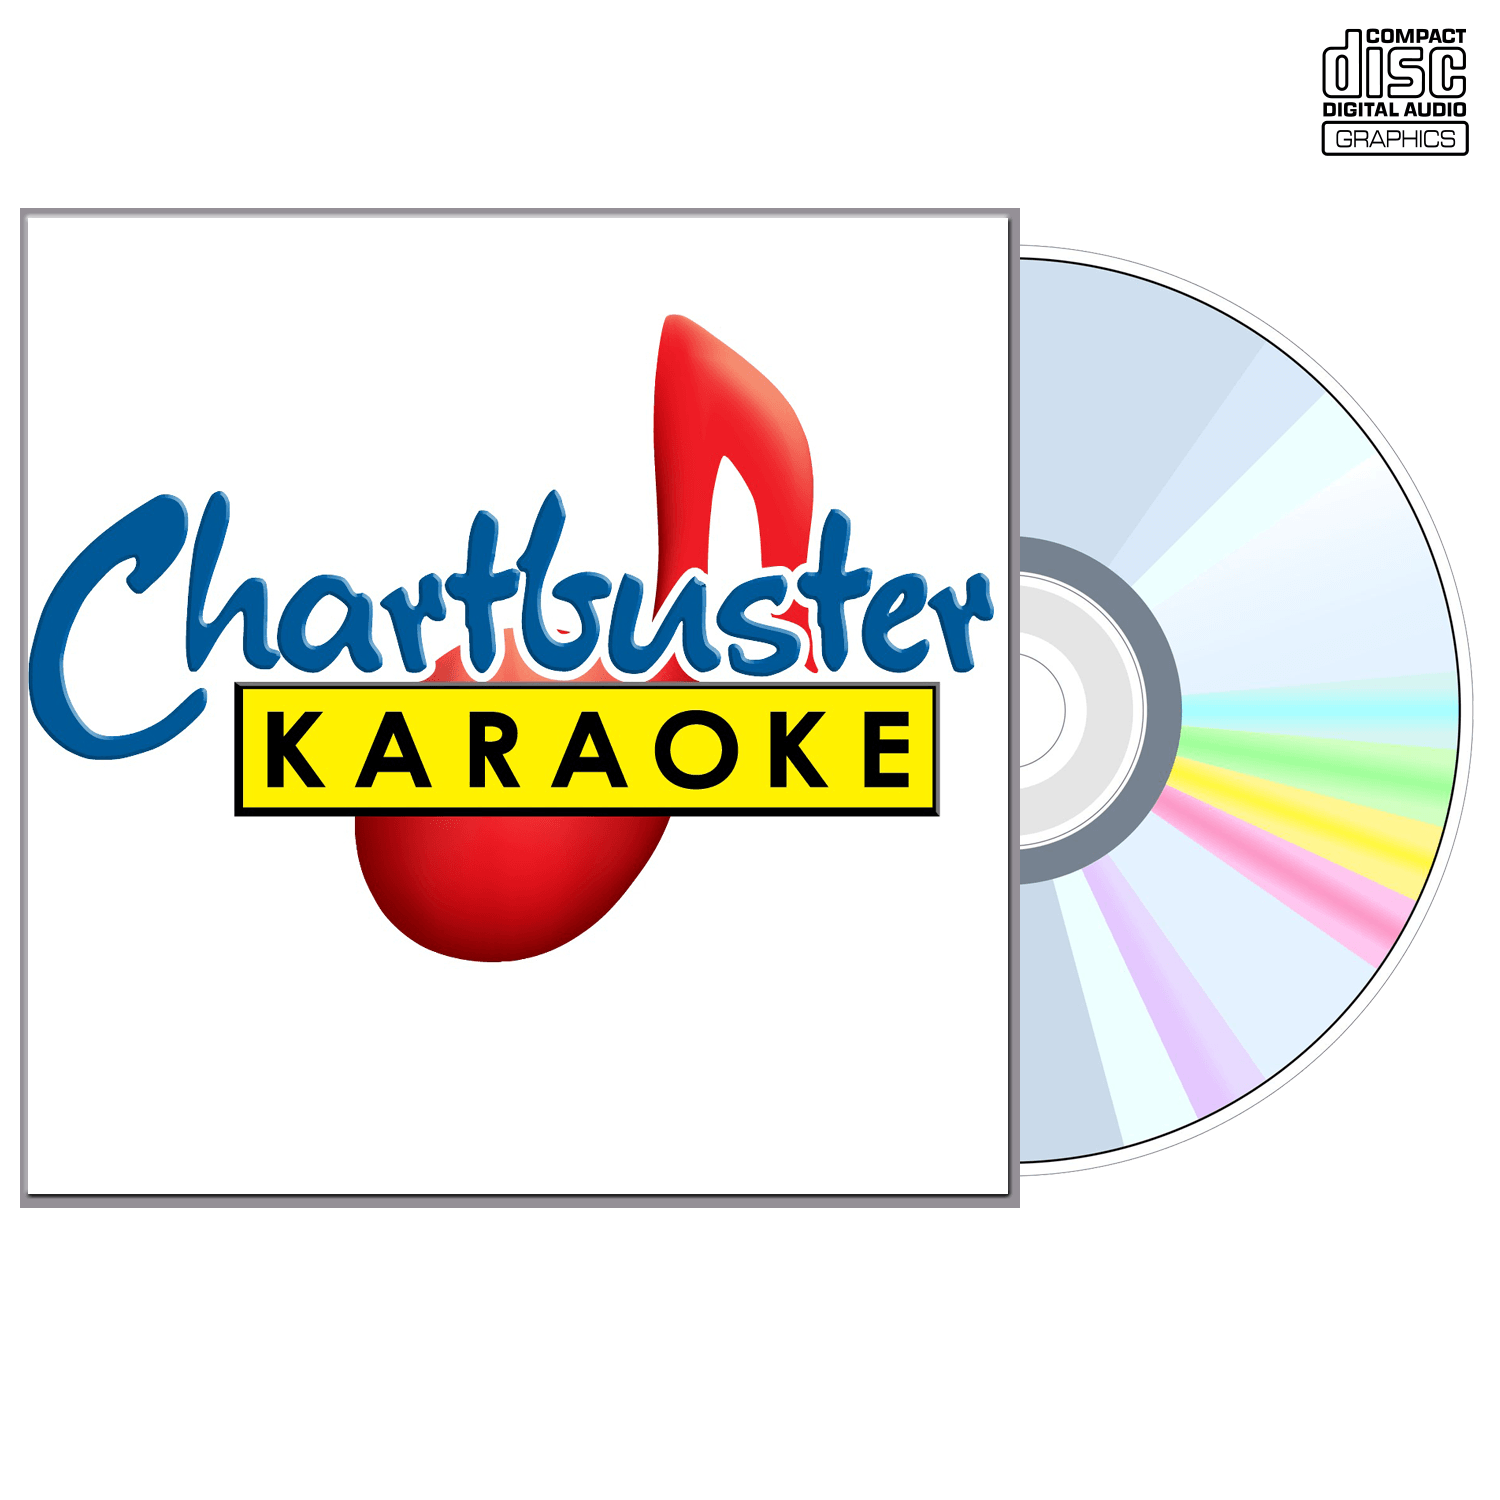 Loretta Lynn Vol 4 - CD+G - Chartbuster Karaoke - Karaoke Home Entertainment